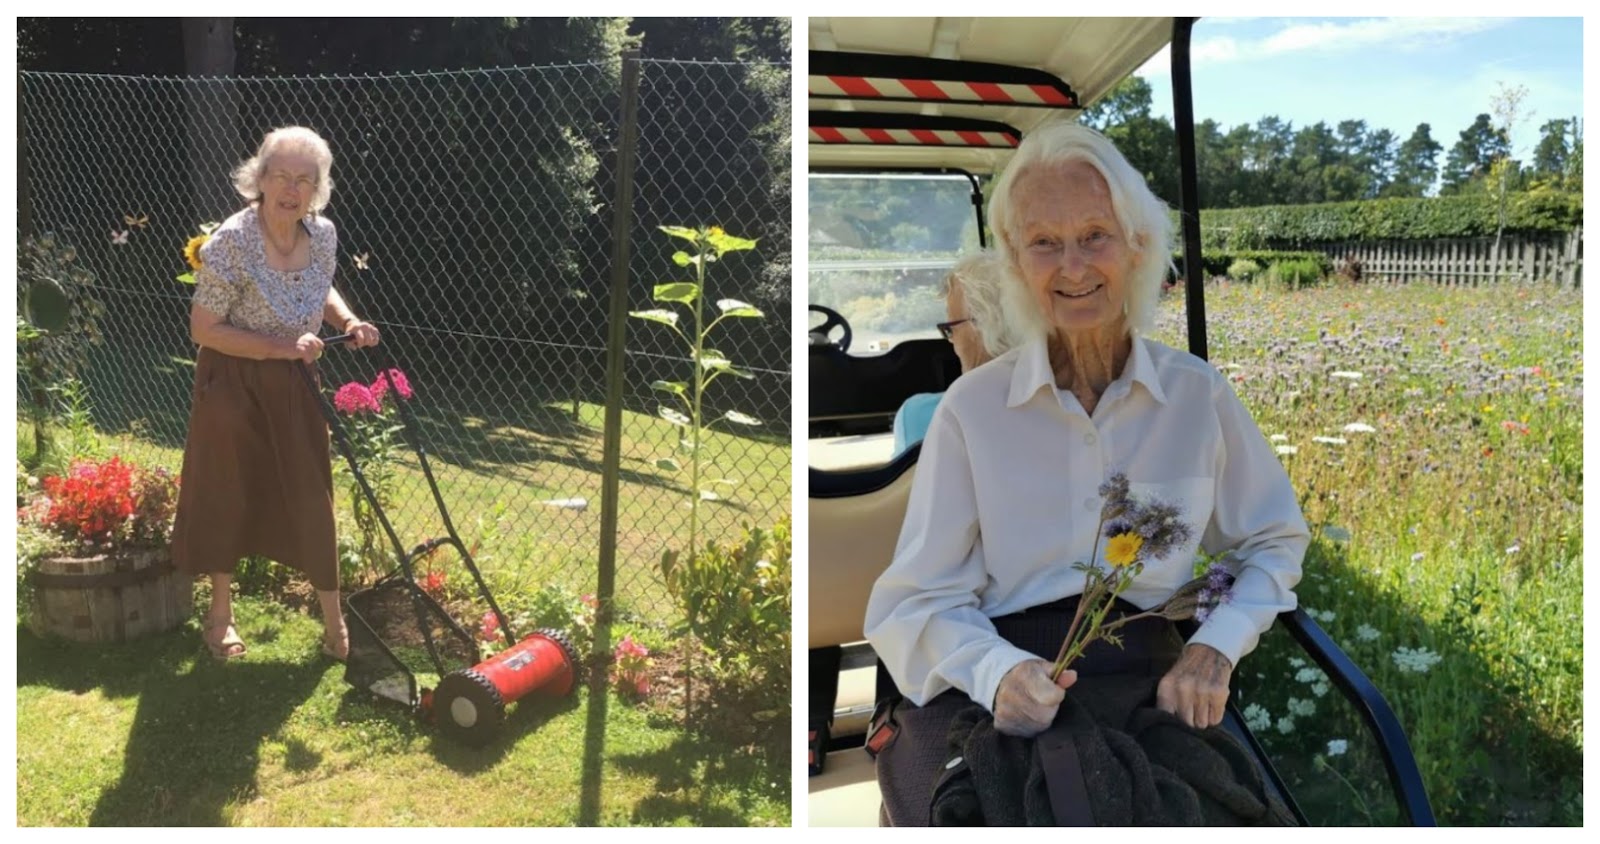 Two elderly ladies enjoying garden space at care home